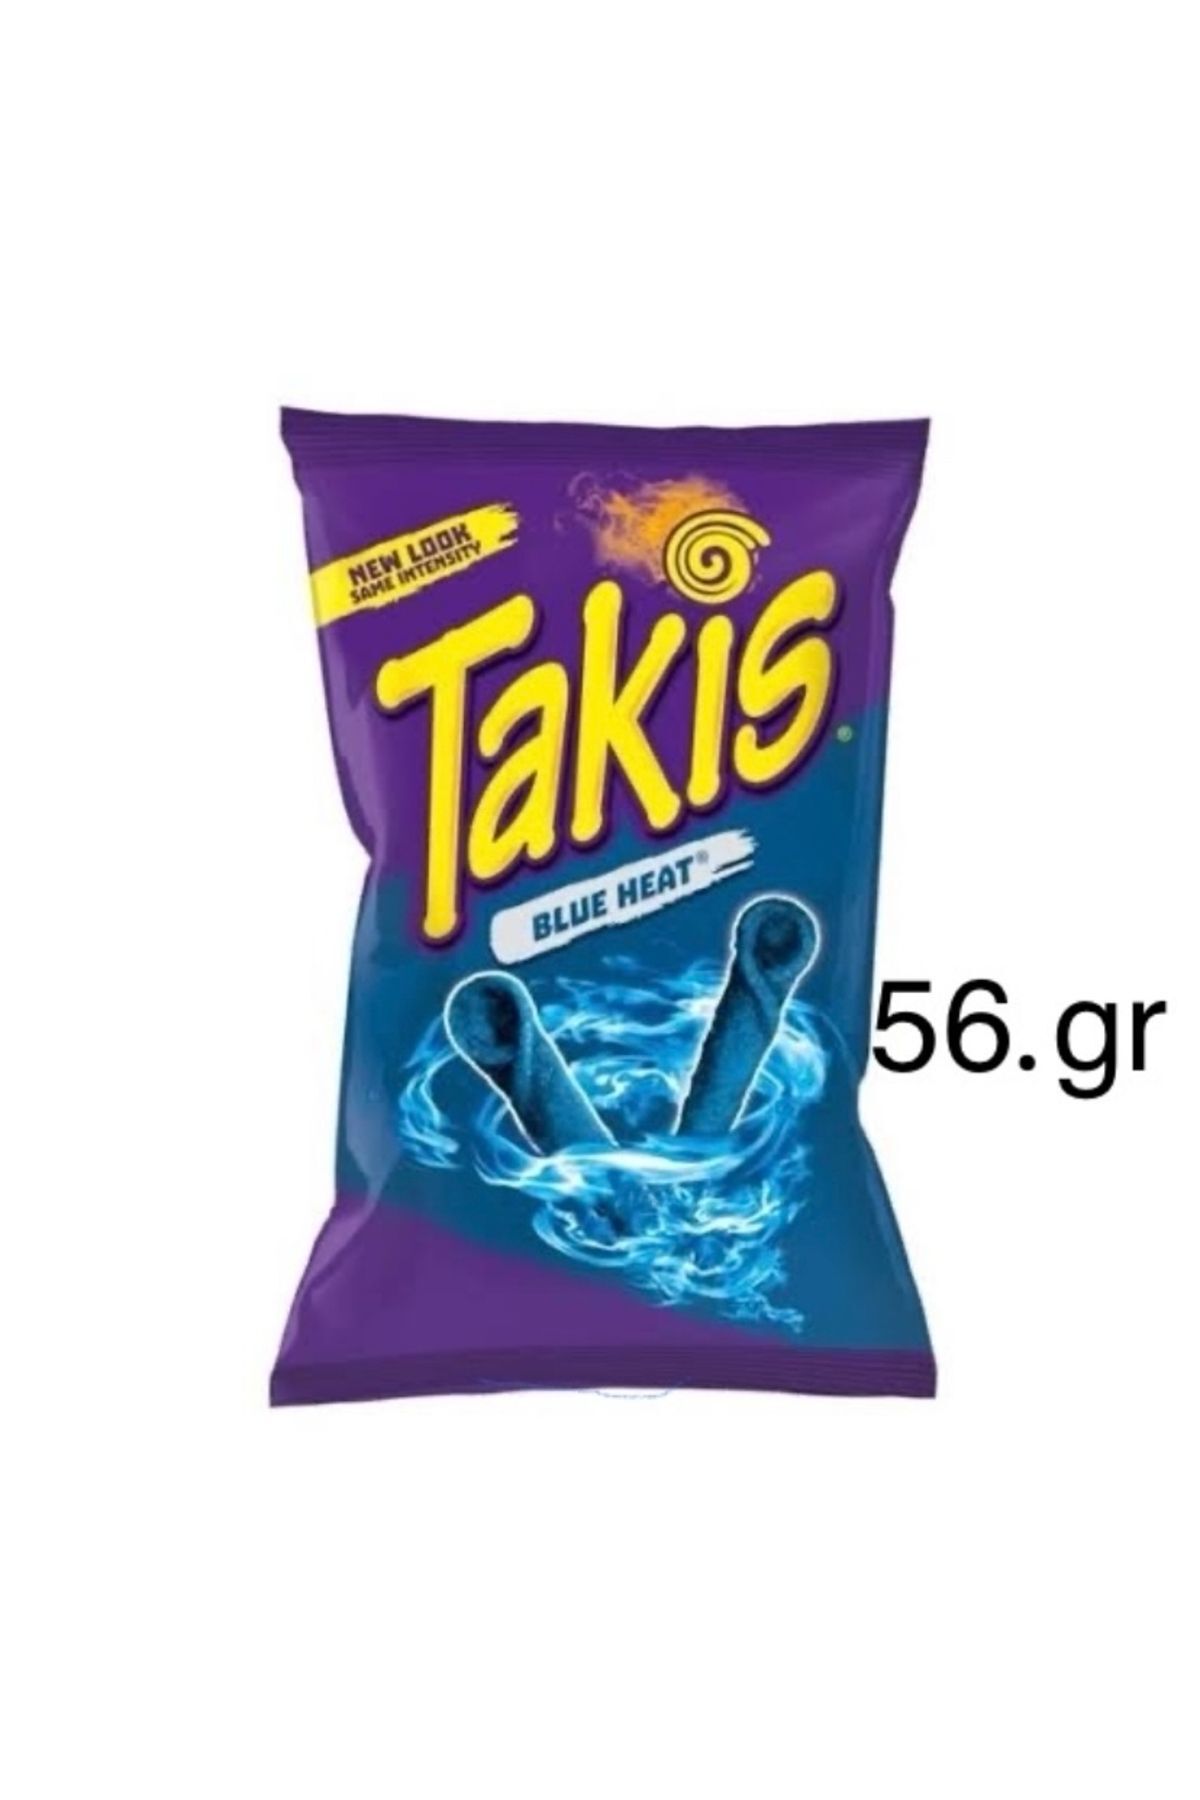 Takis blue heat 56 gram